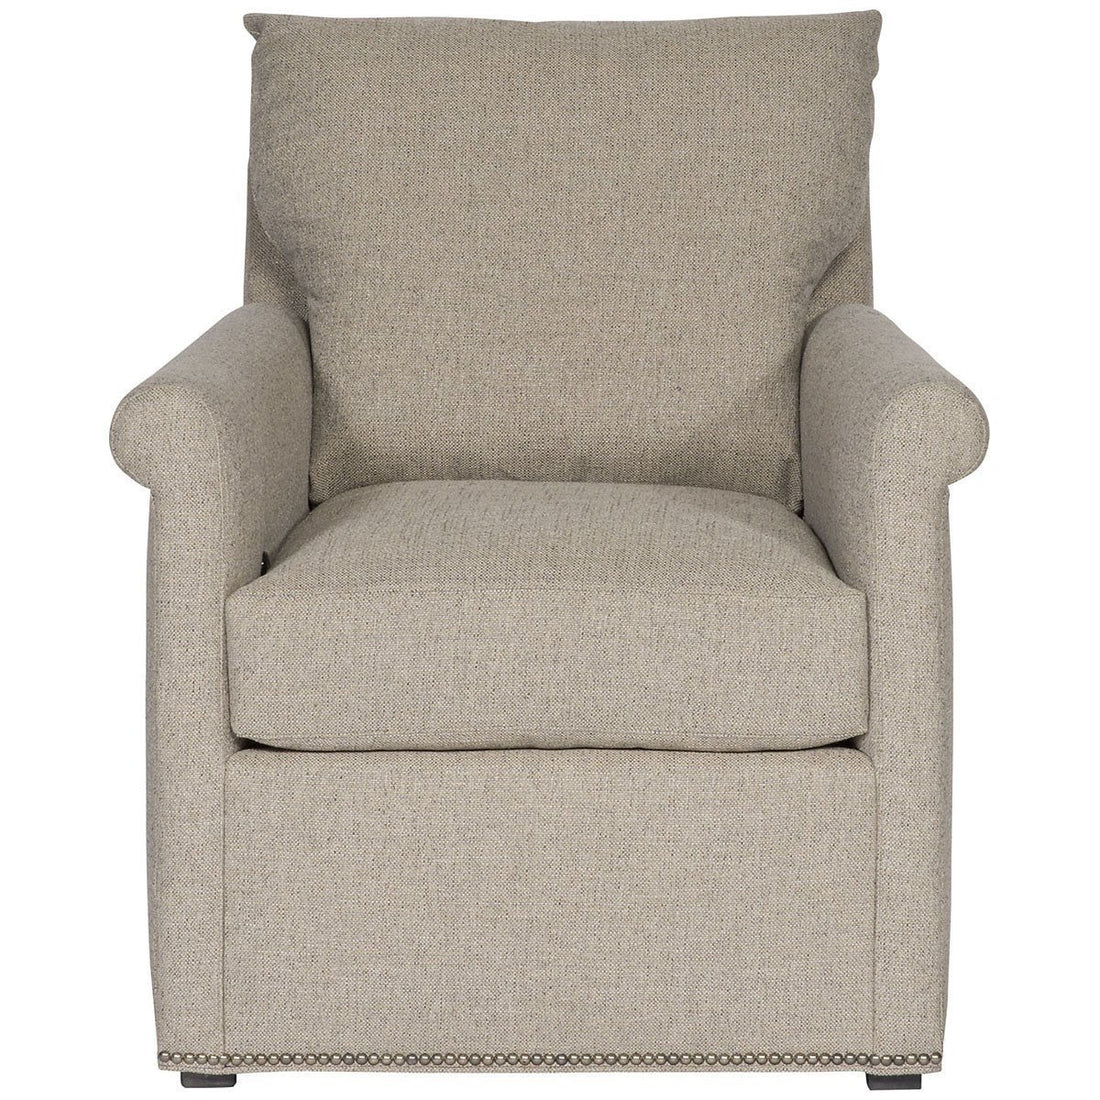 Vanguard Furniture Jagger Fog Gwynn Tilt Back Chair